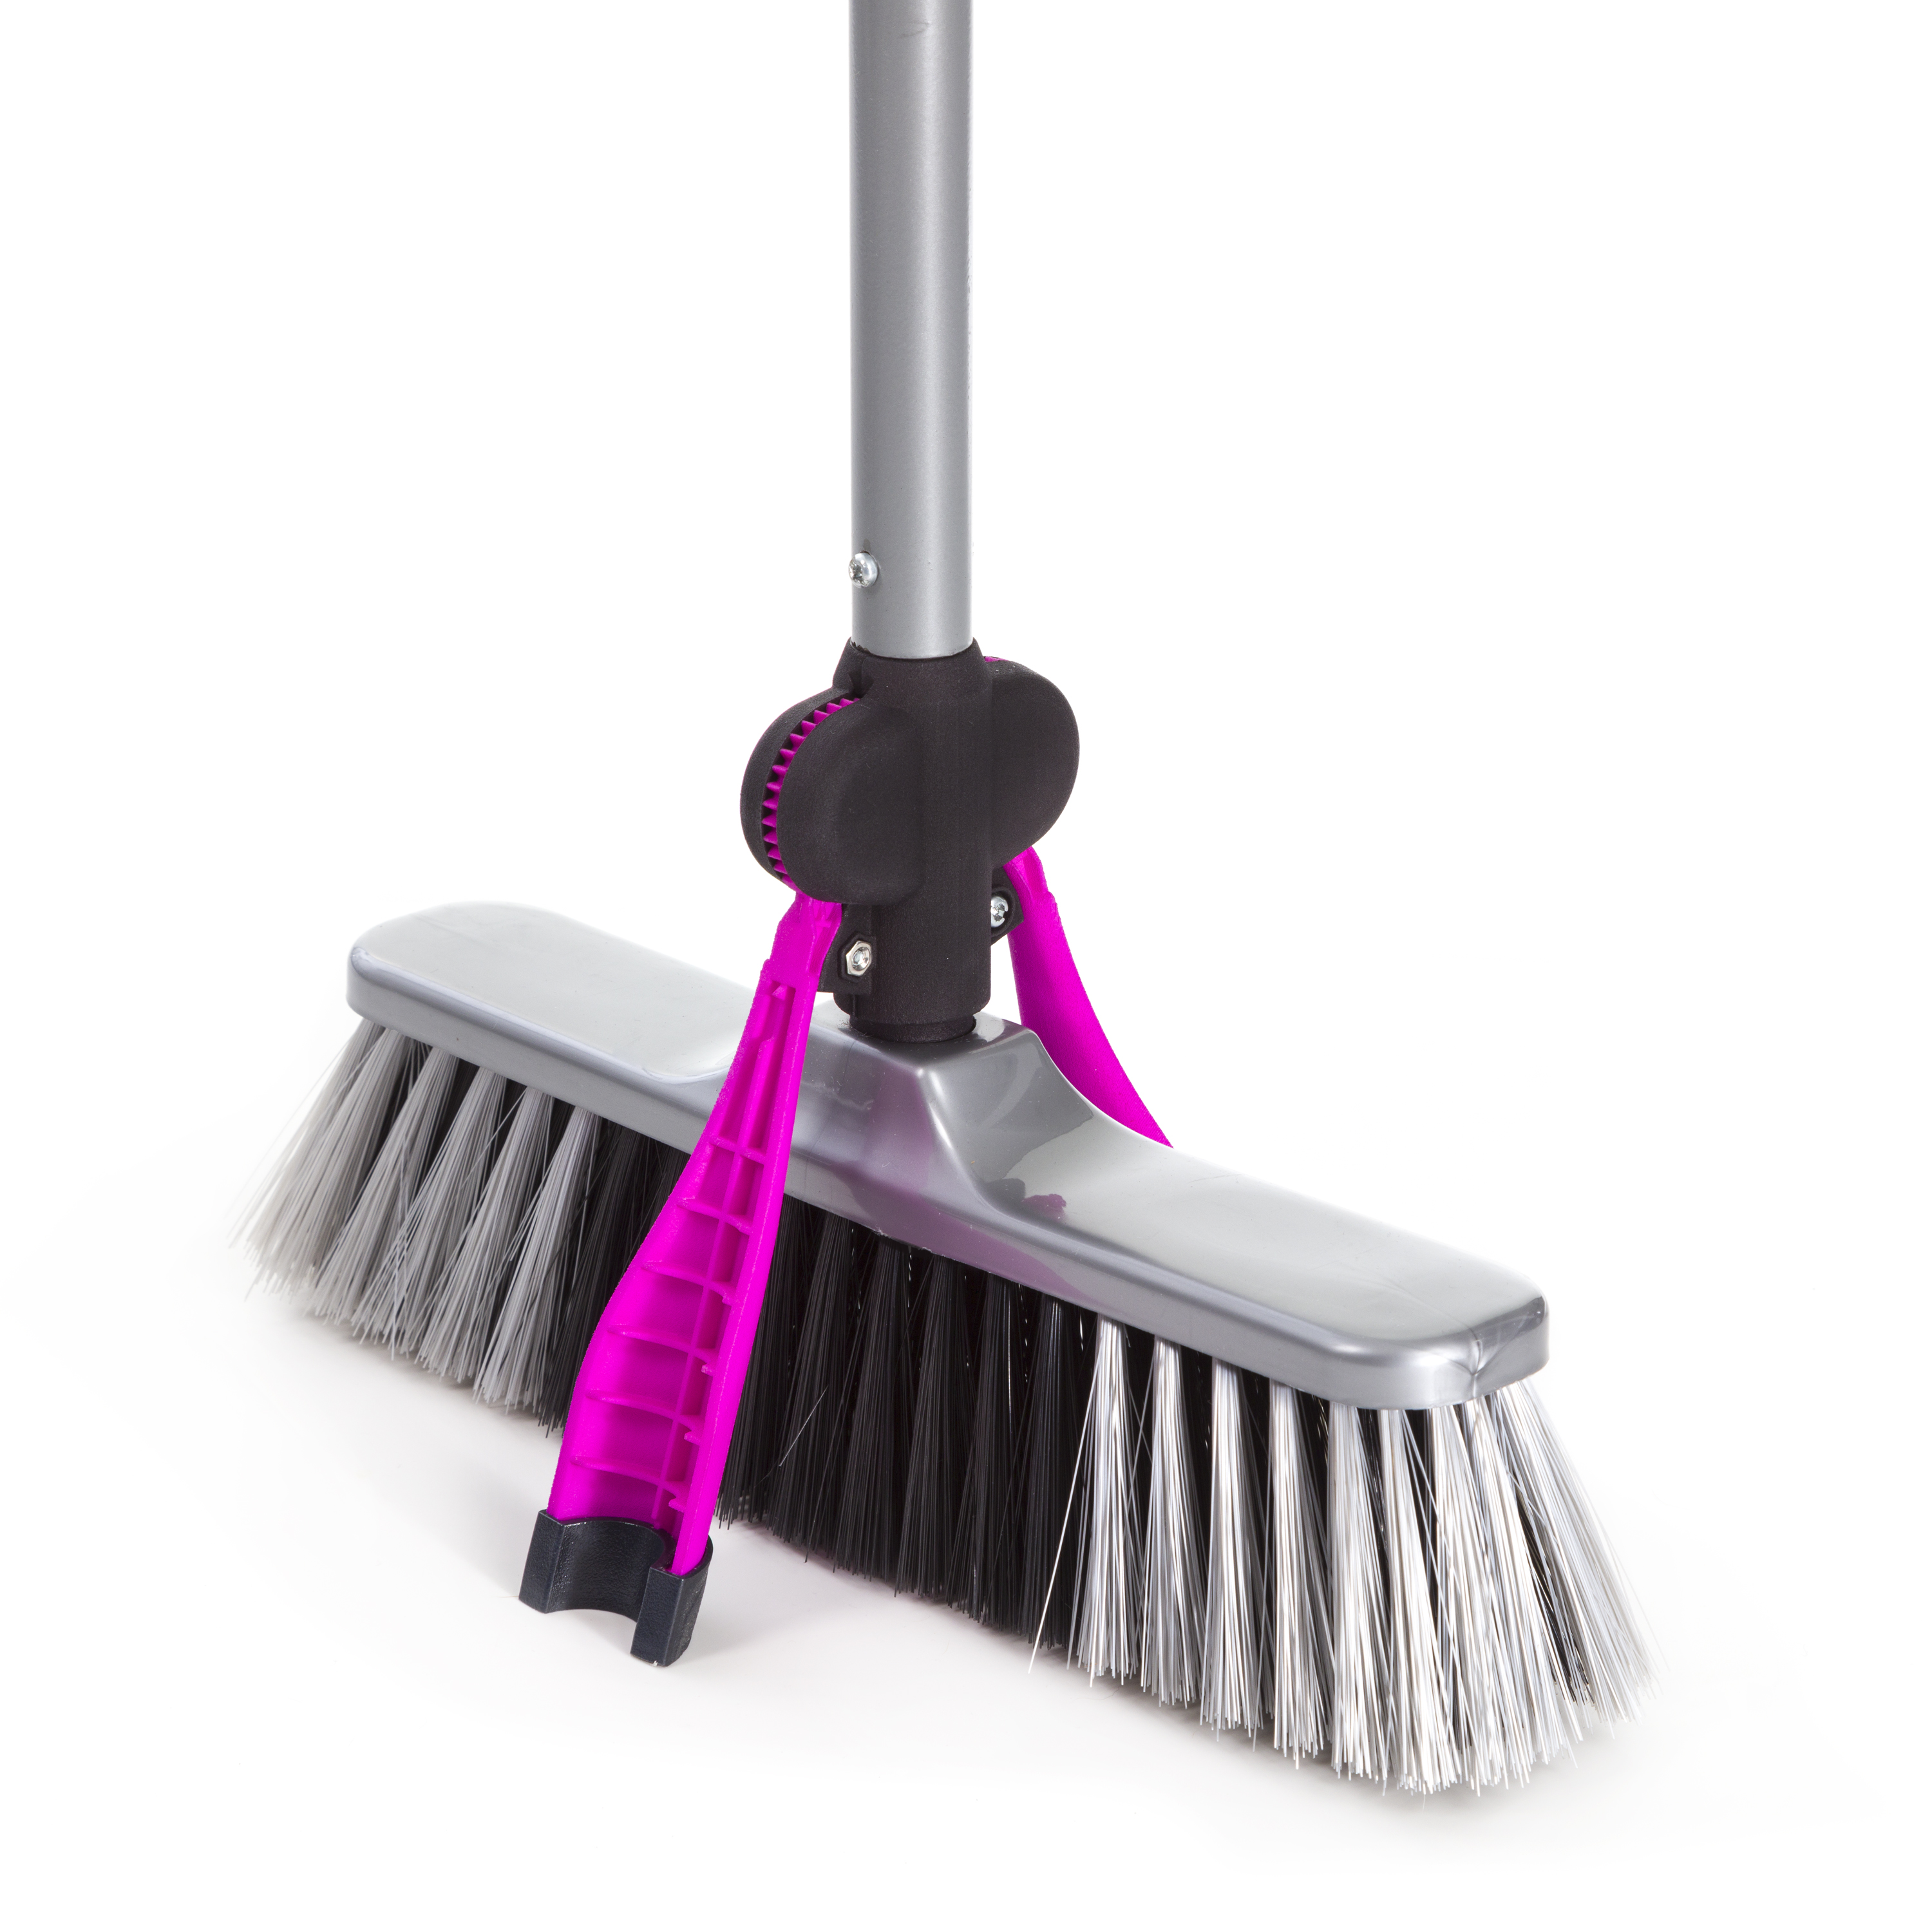 SelfieBroom, the Self-standing Broom With a Selfie Stand, is Live on Kickstarter3000 x 3000